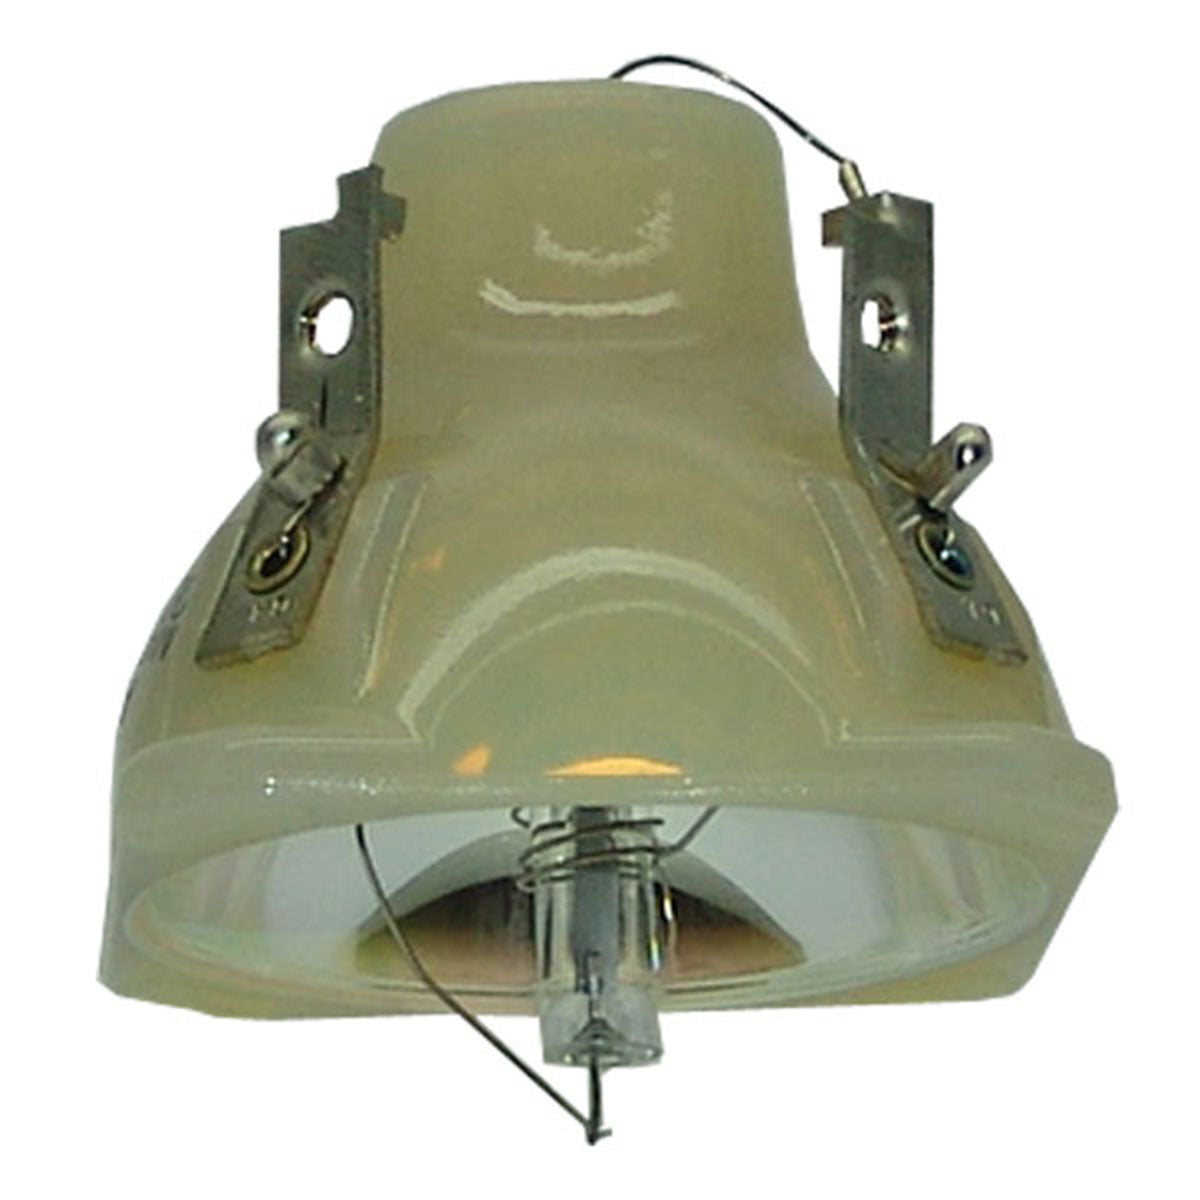 BenQ 5J.J3E05.001 Philips Projector Bare Lamp